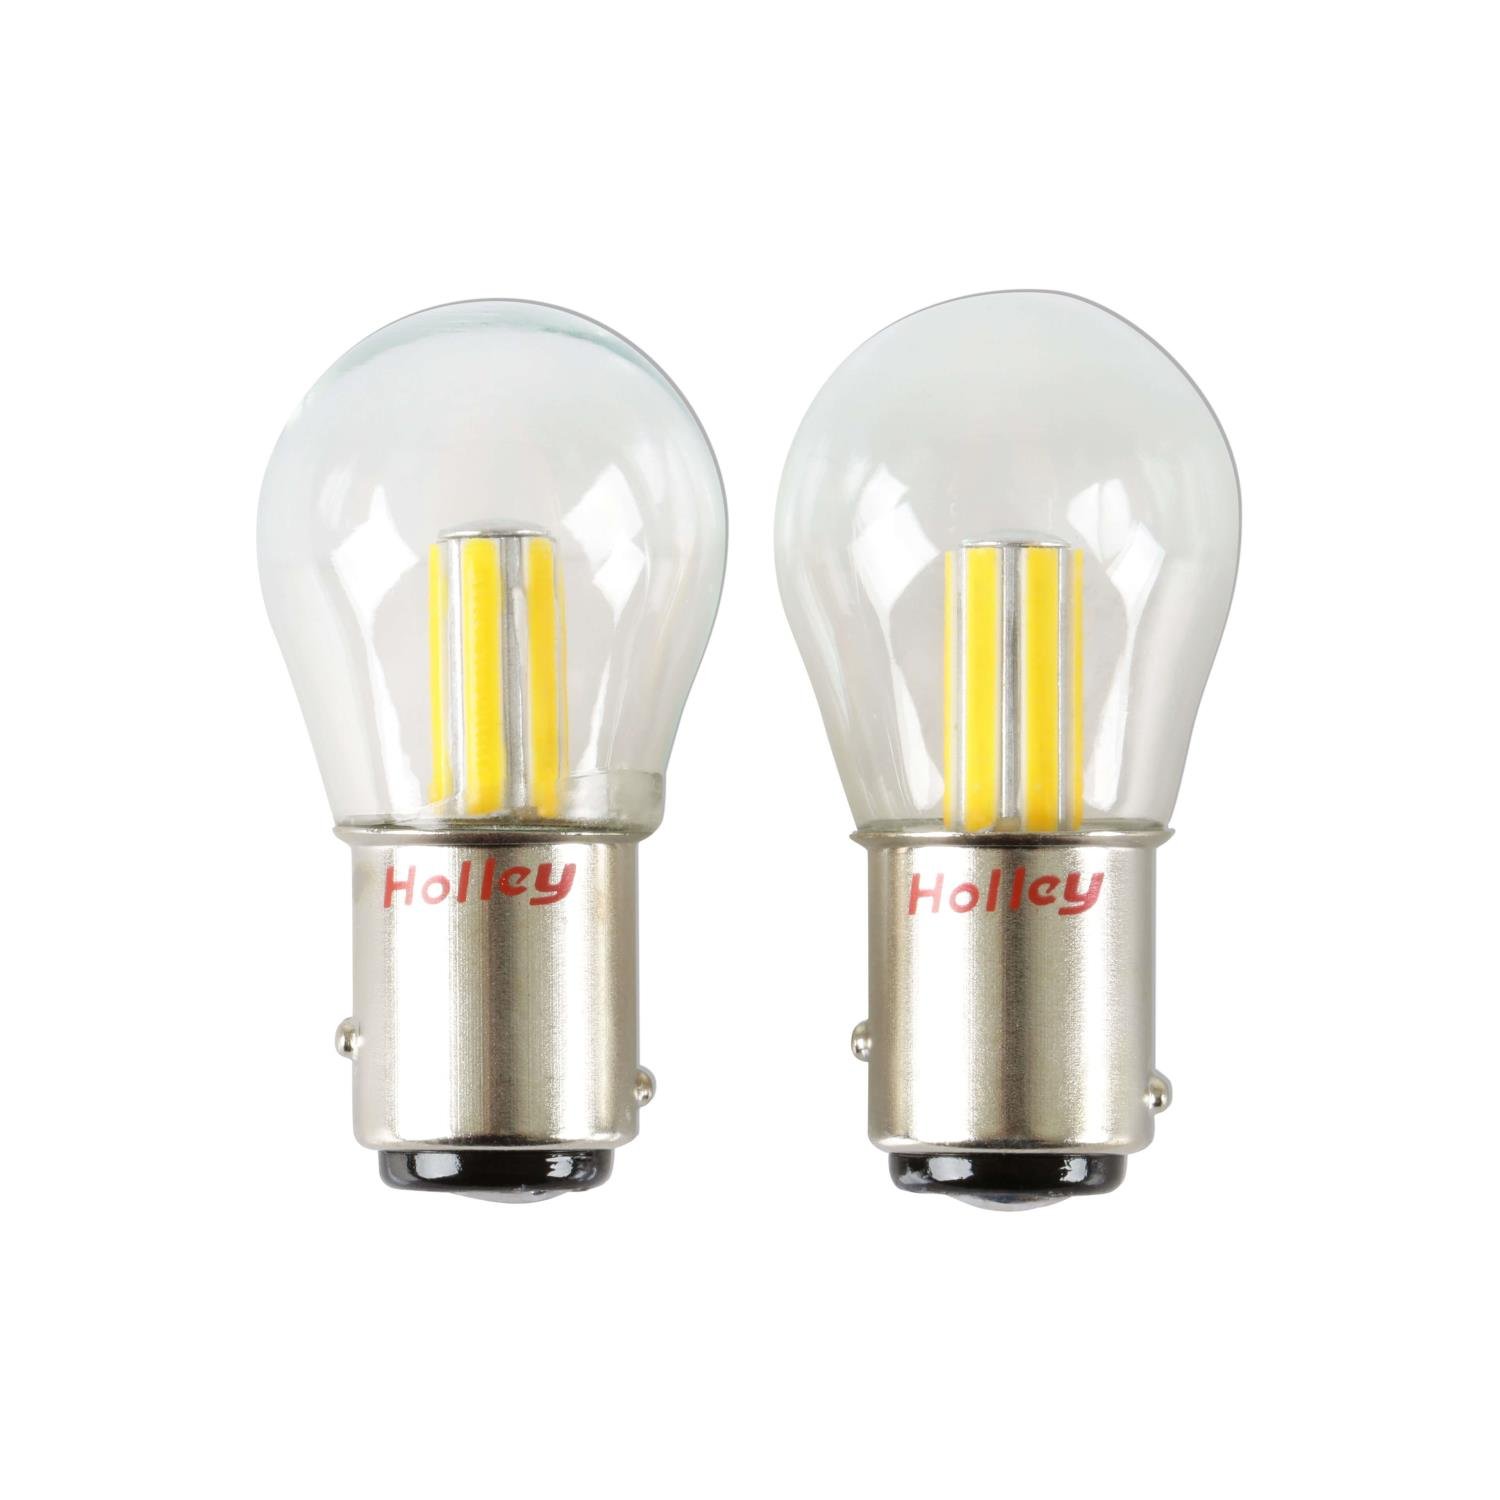 RetroBright LED 1157 Turn Signal / Parking Light Bulbs [Classic White]